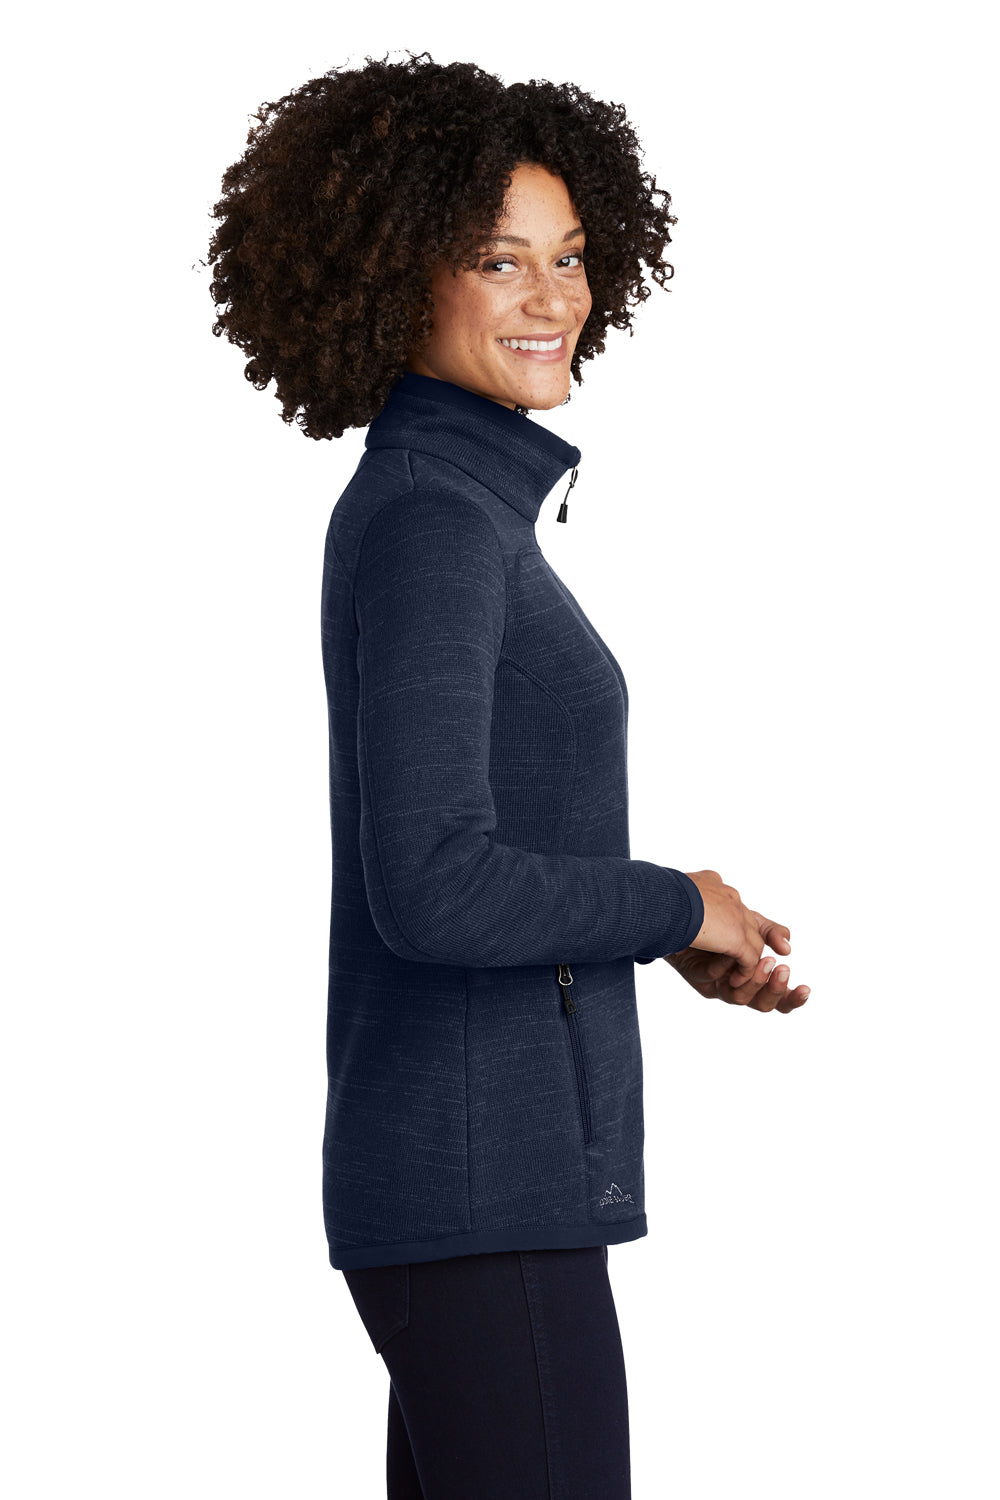 Eddie Bauer EB251 Womens Pill Resistant Fleece Full Zip Jacket Heather River Navy Blue Model Side